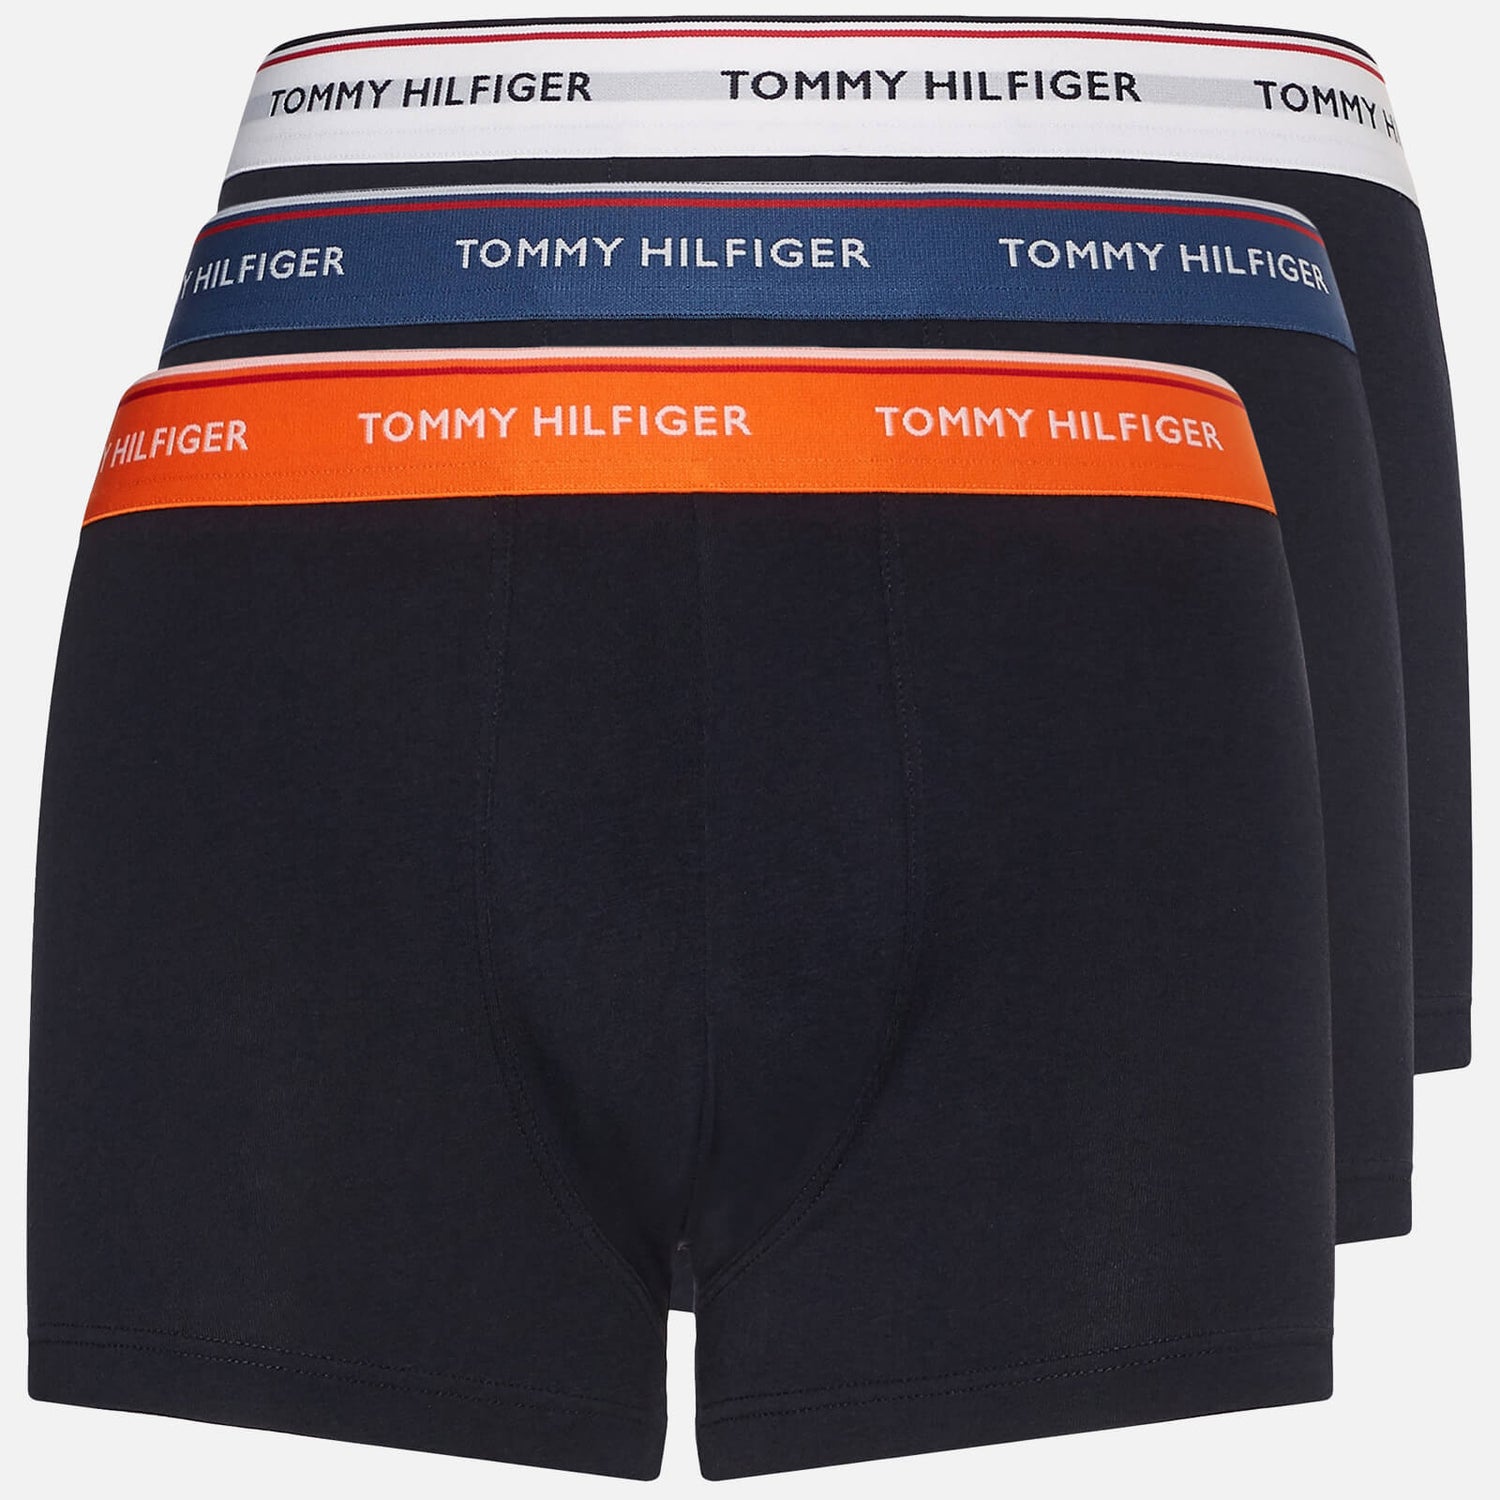 Tommy Hilfiger Men's 3-Pack Contrast Waistband Trunks - Petrol Blue/Cypress Orange/White - M